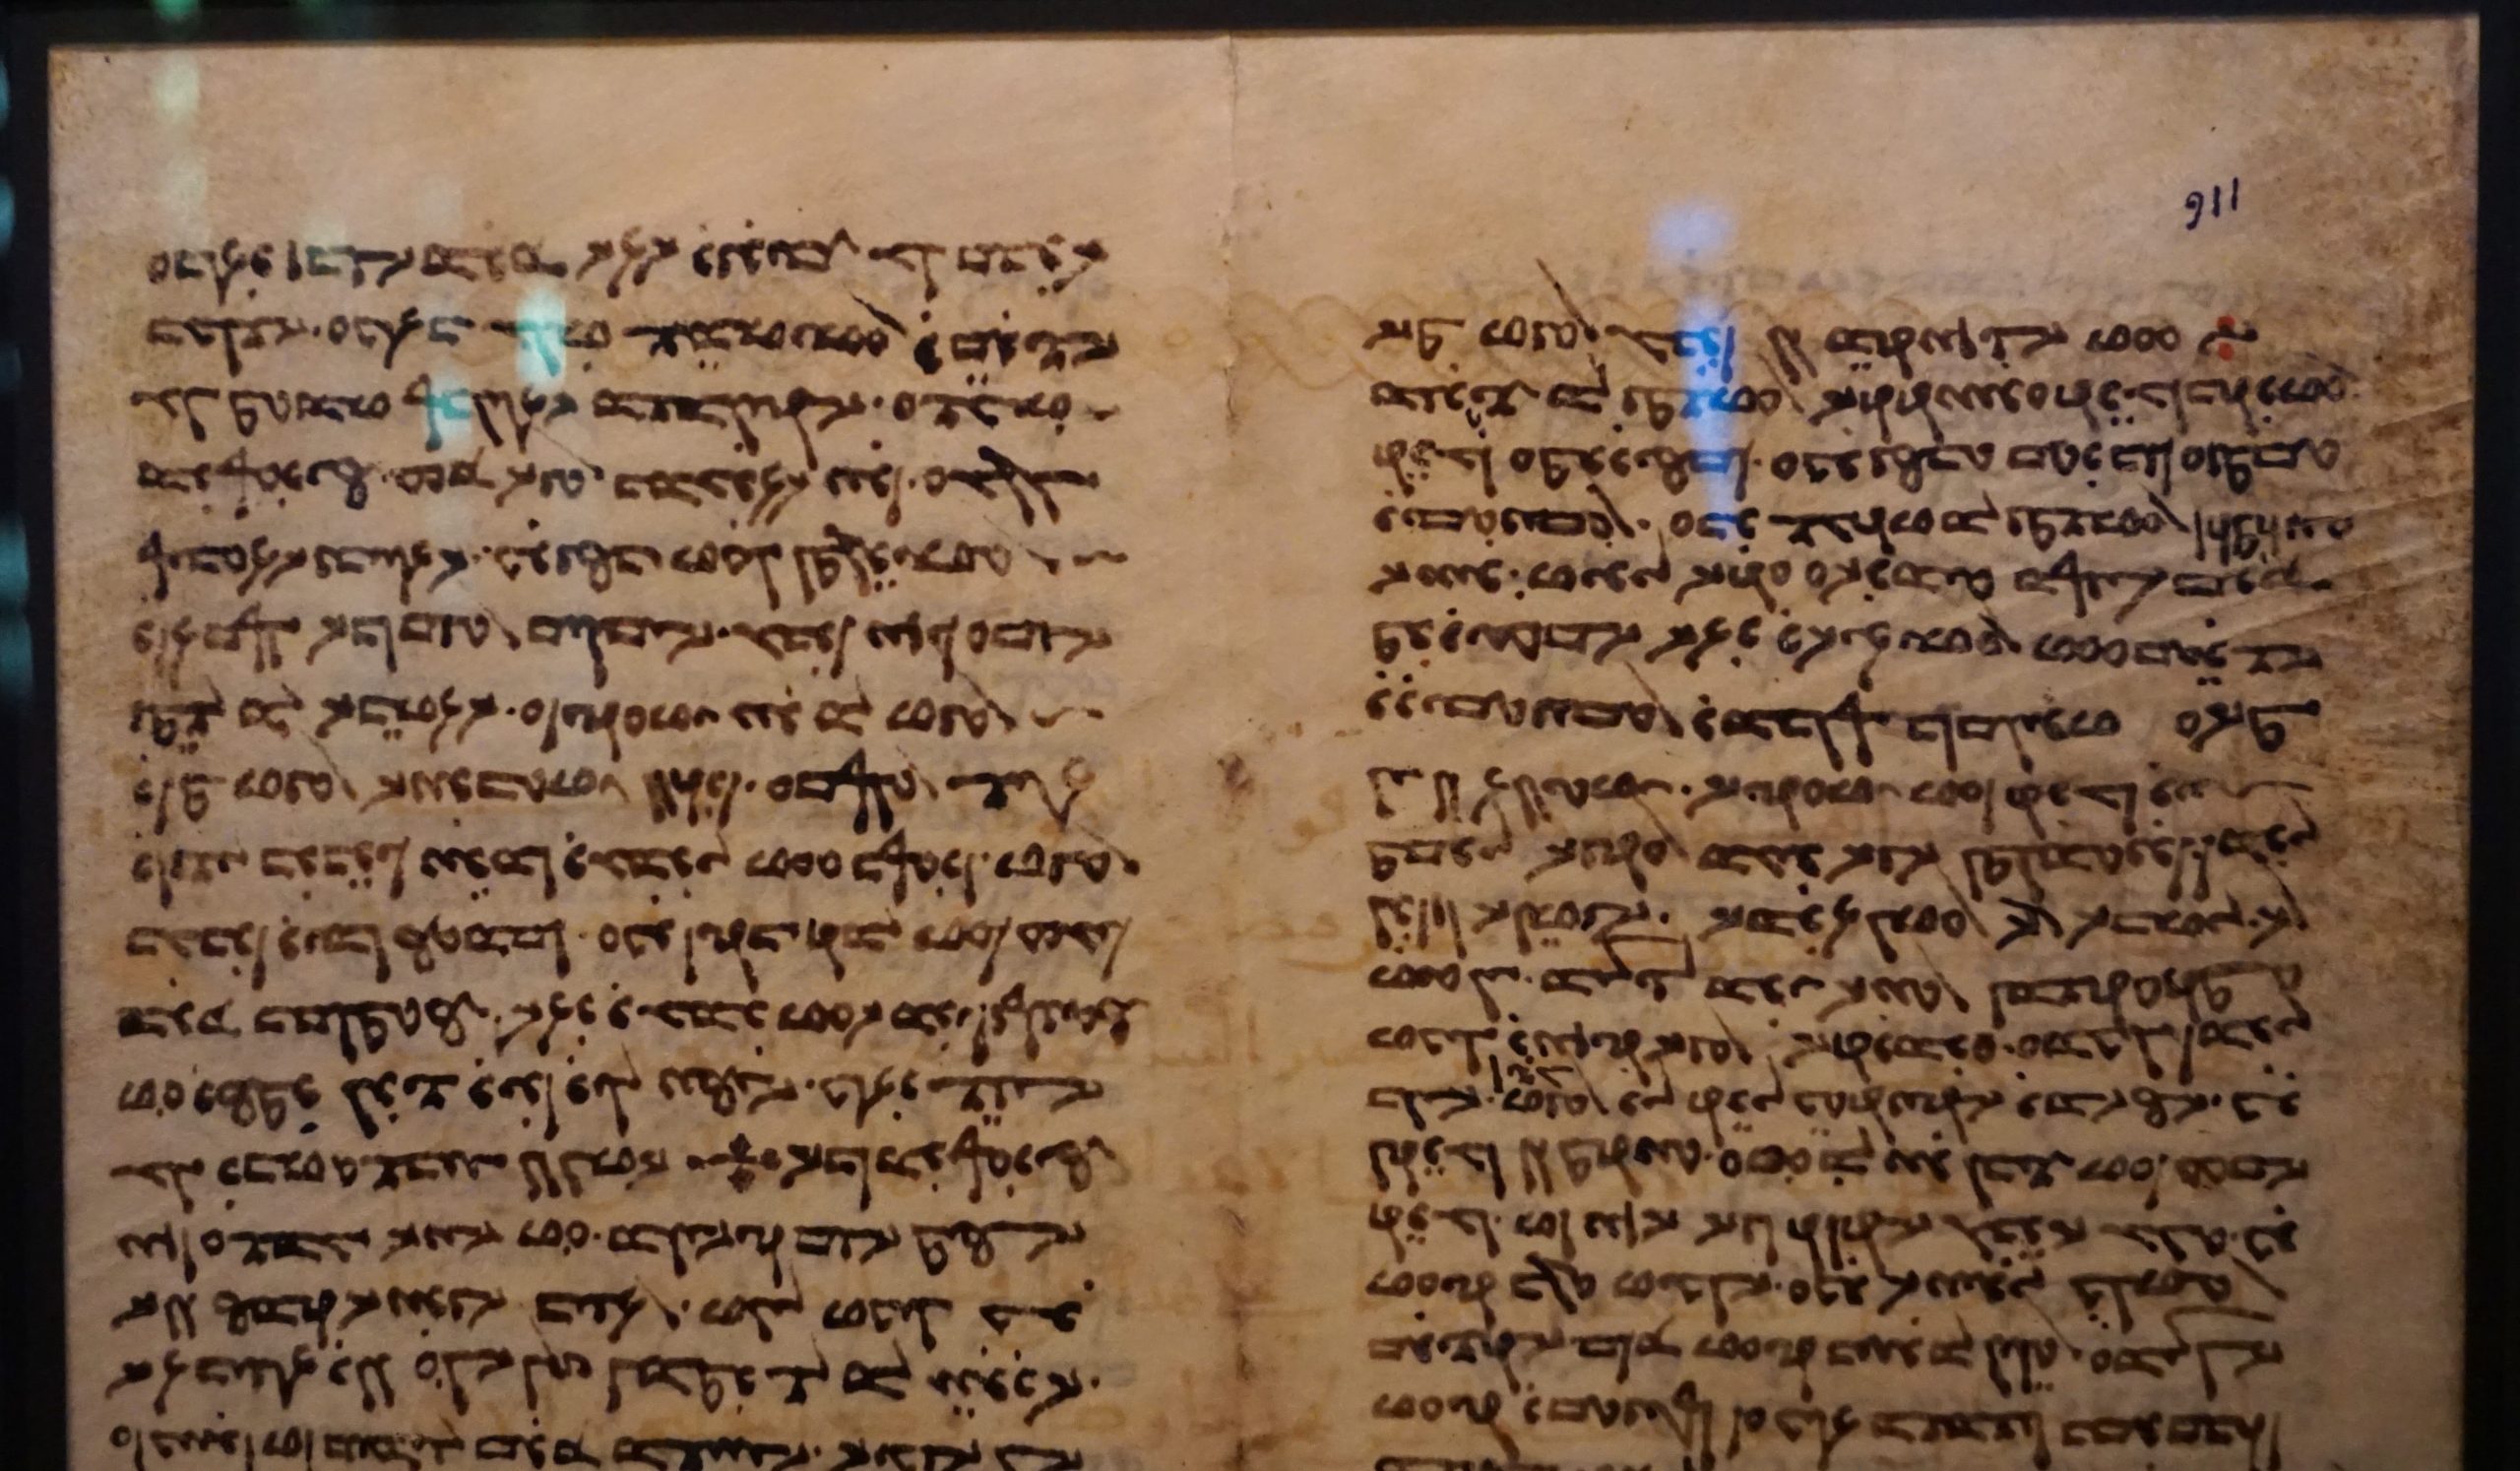 Manuscript from the Vatican Pavilion